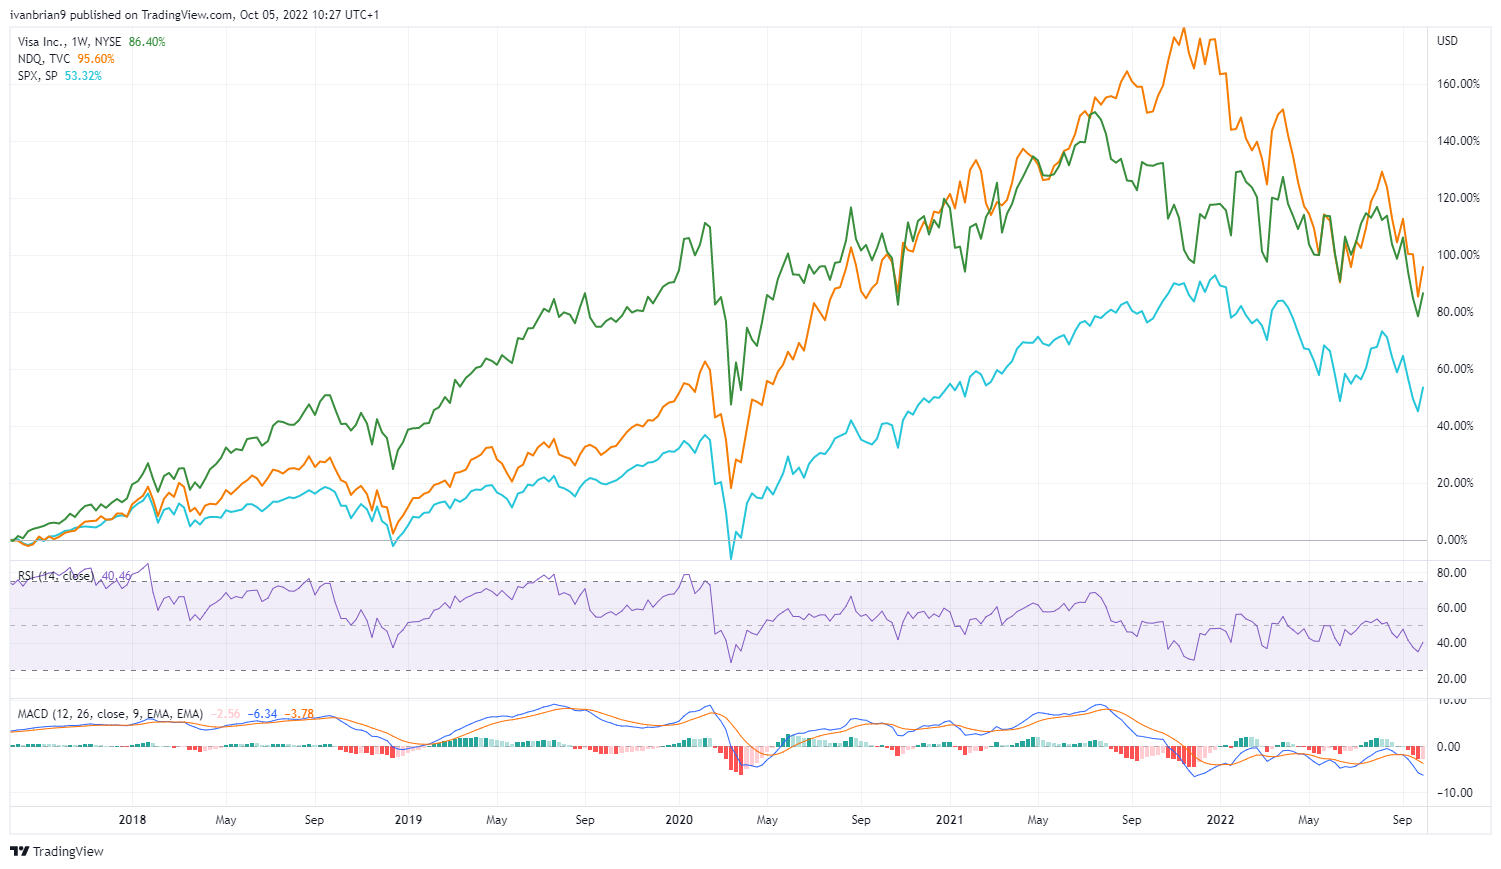 Visa stock vs NASDAQ and S&P500 last 5 years